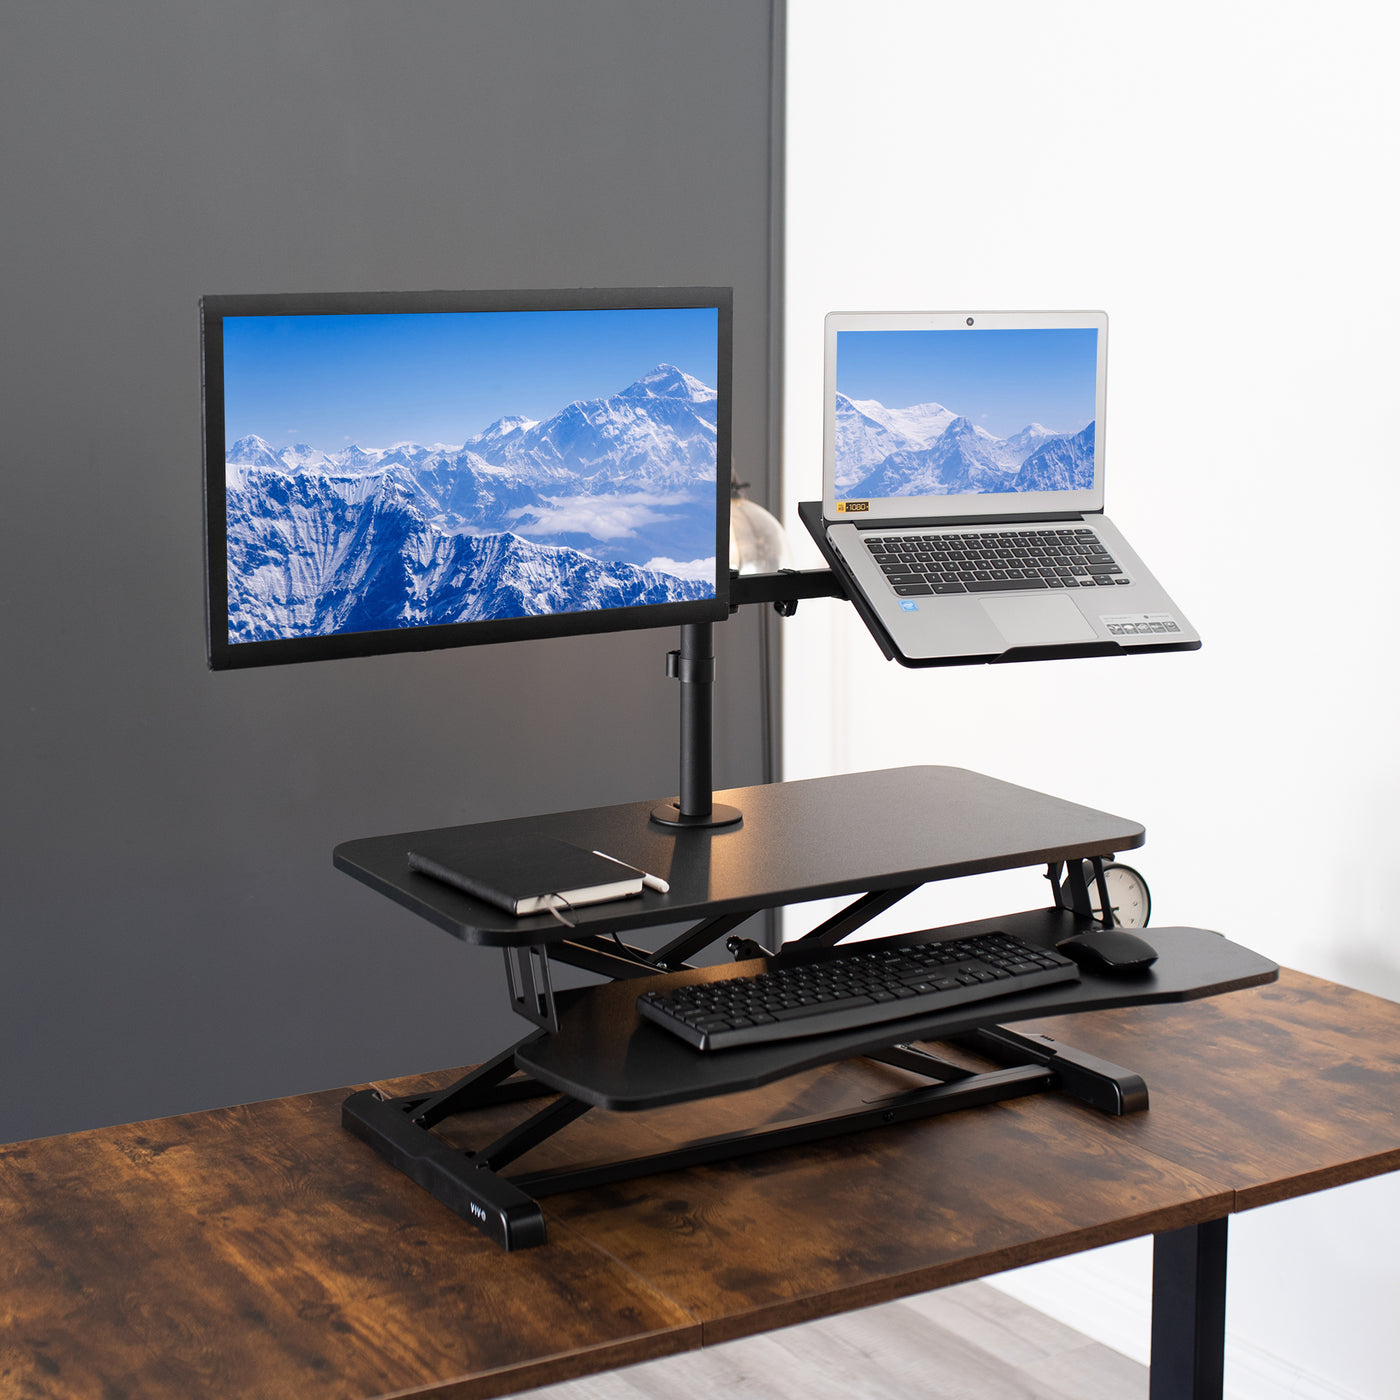 Modern desk riser on a table top creating an ergonomic workspace setup.